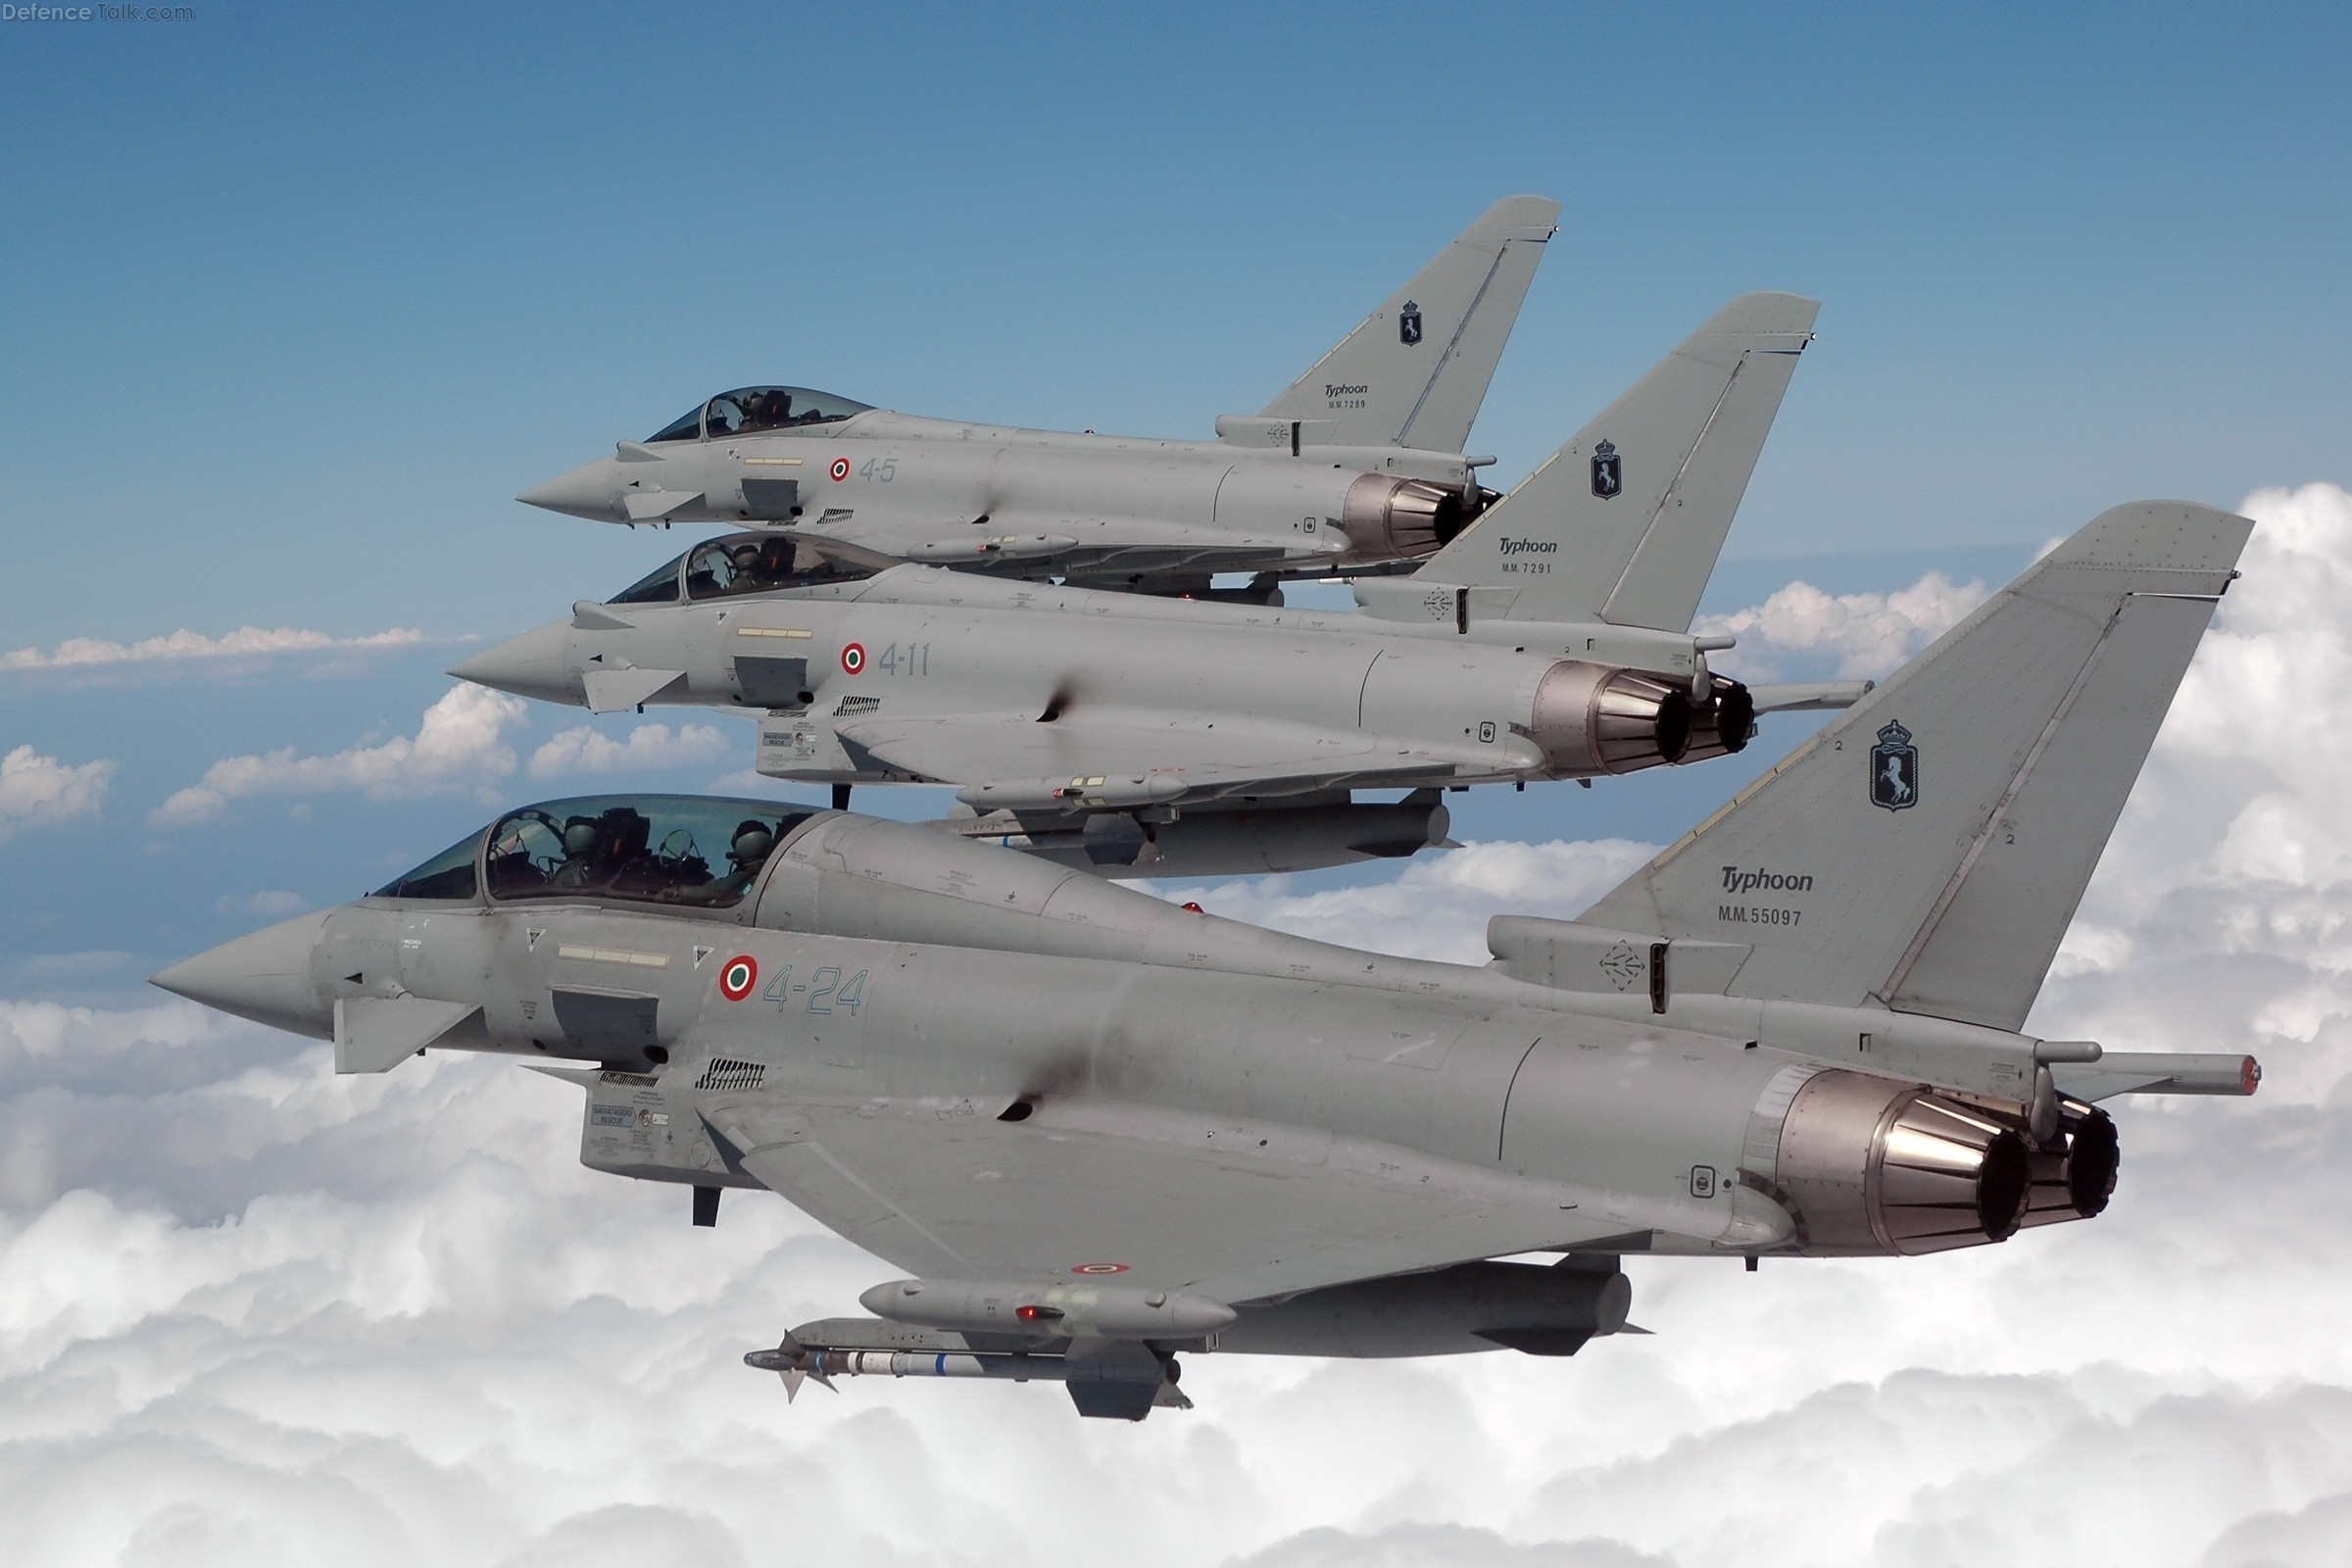 Eurofighter Typhoon over Grosseto